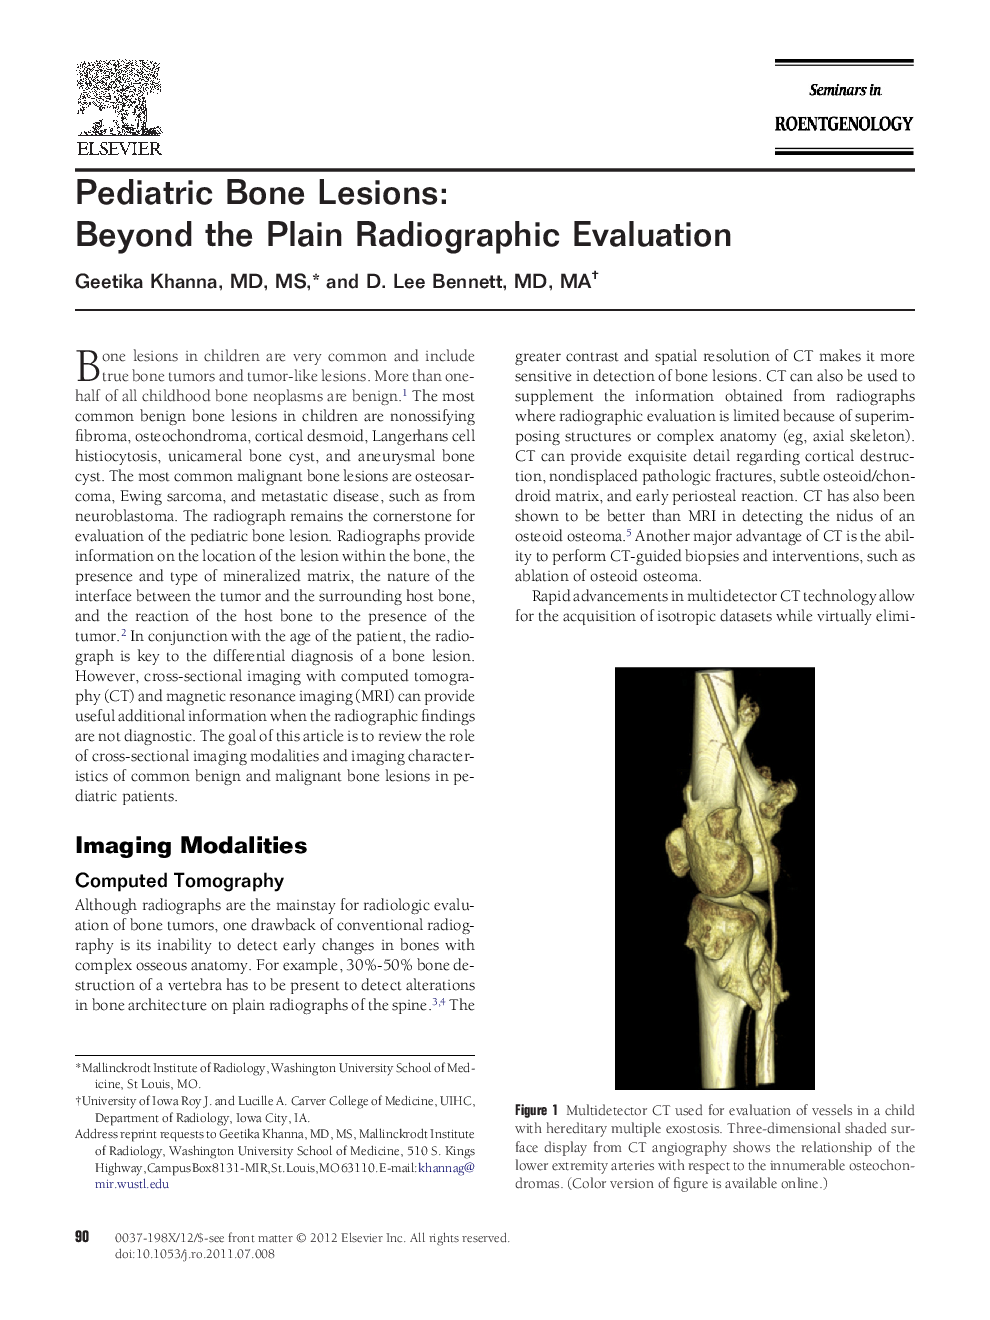 Pediatric Bone Lesions: Beyond the Plain Radiographic Evaluation